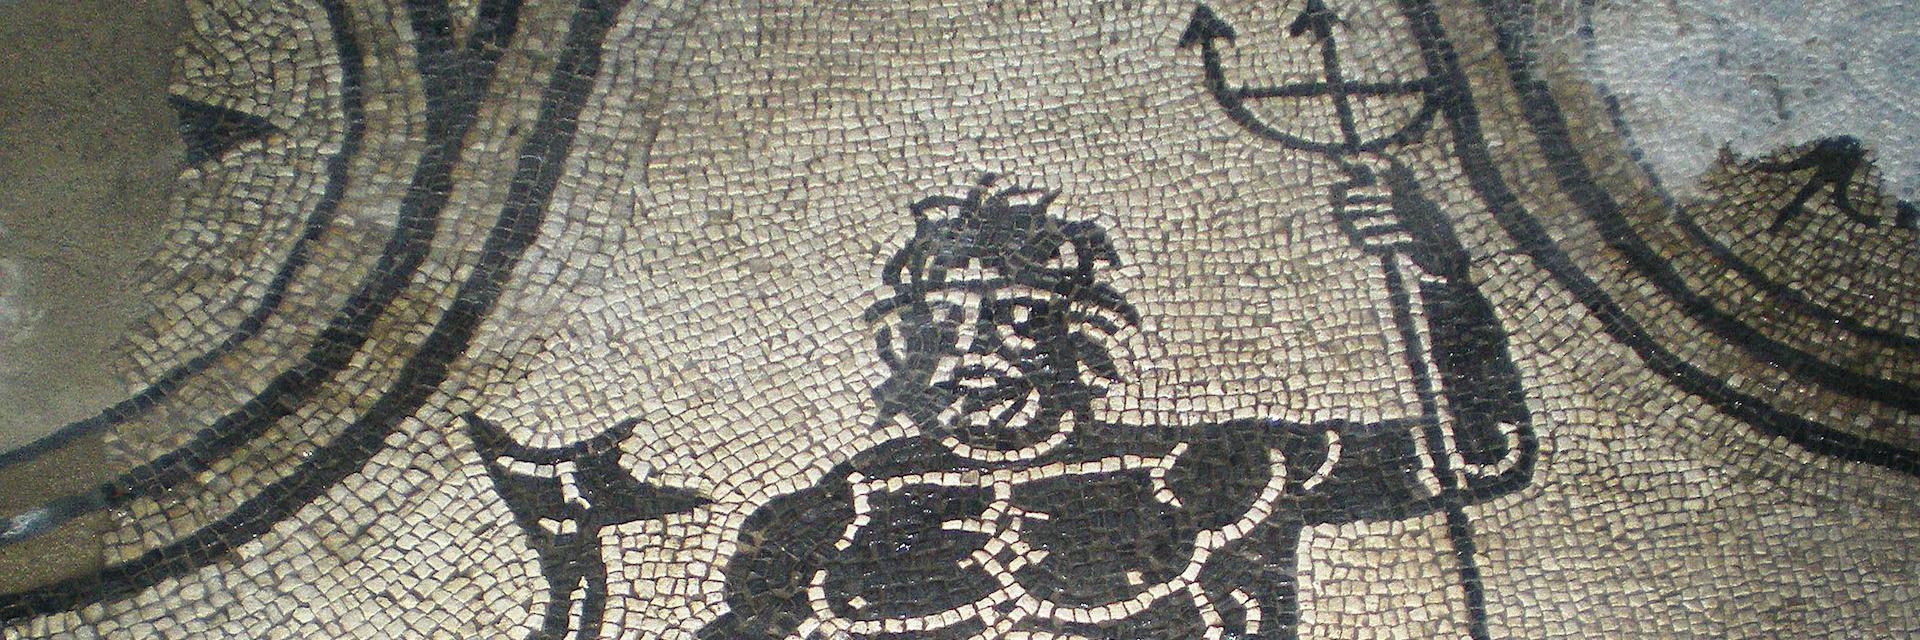 Vasto - Mosaico alle terme romane